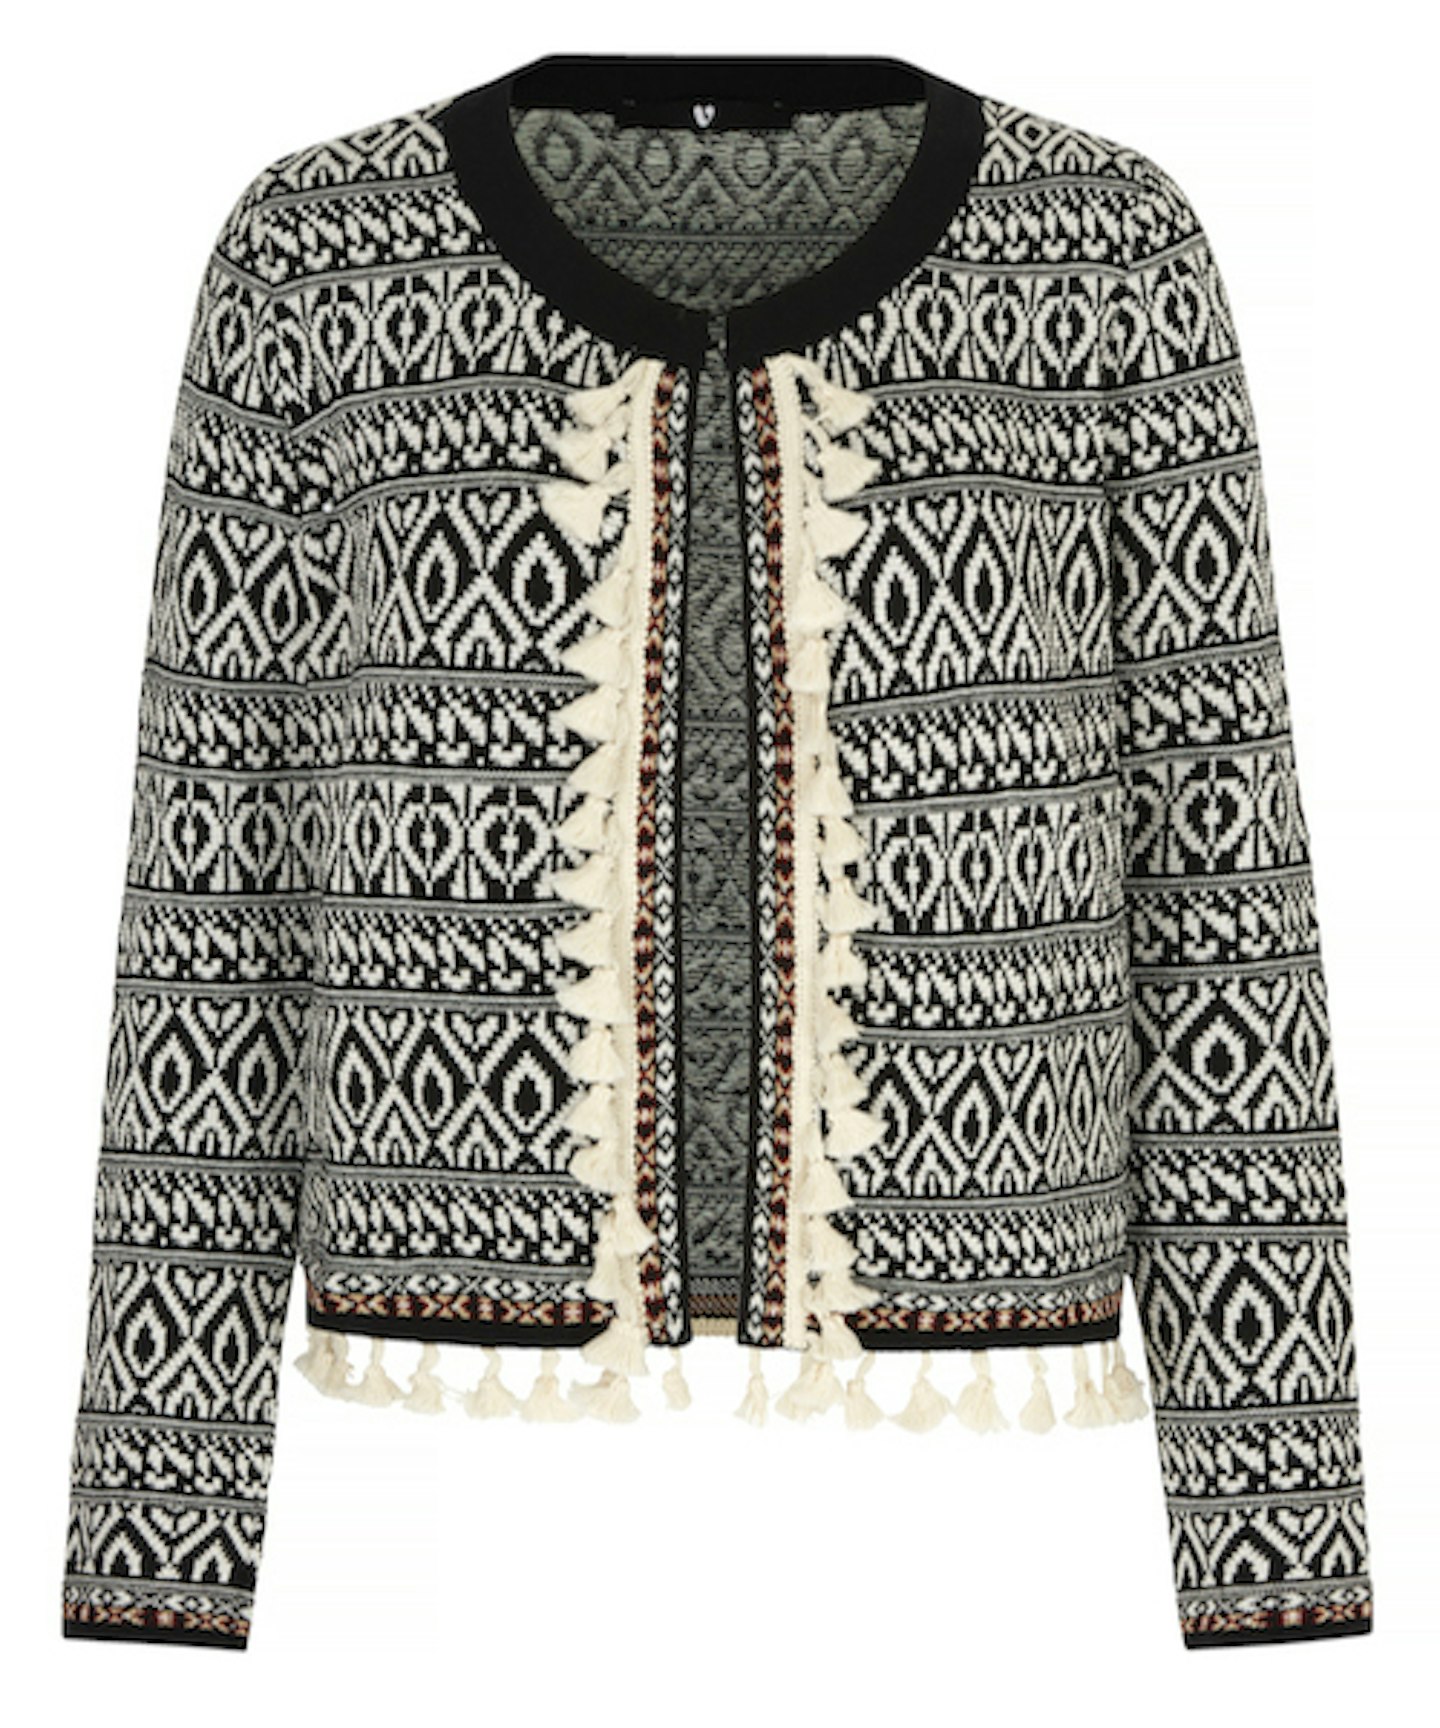 Tassel knitted jacket 30